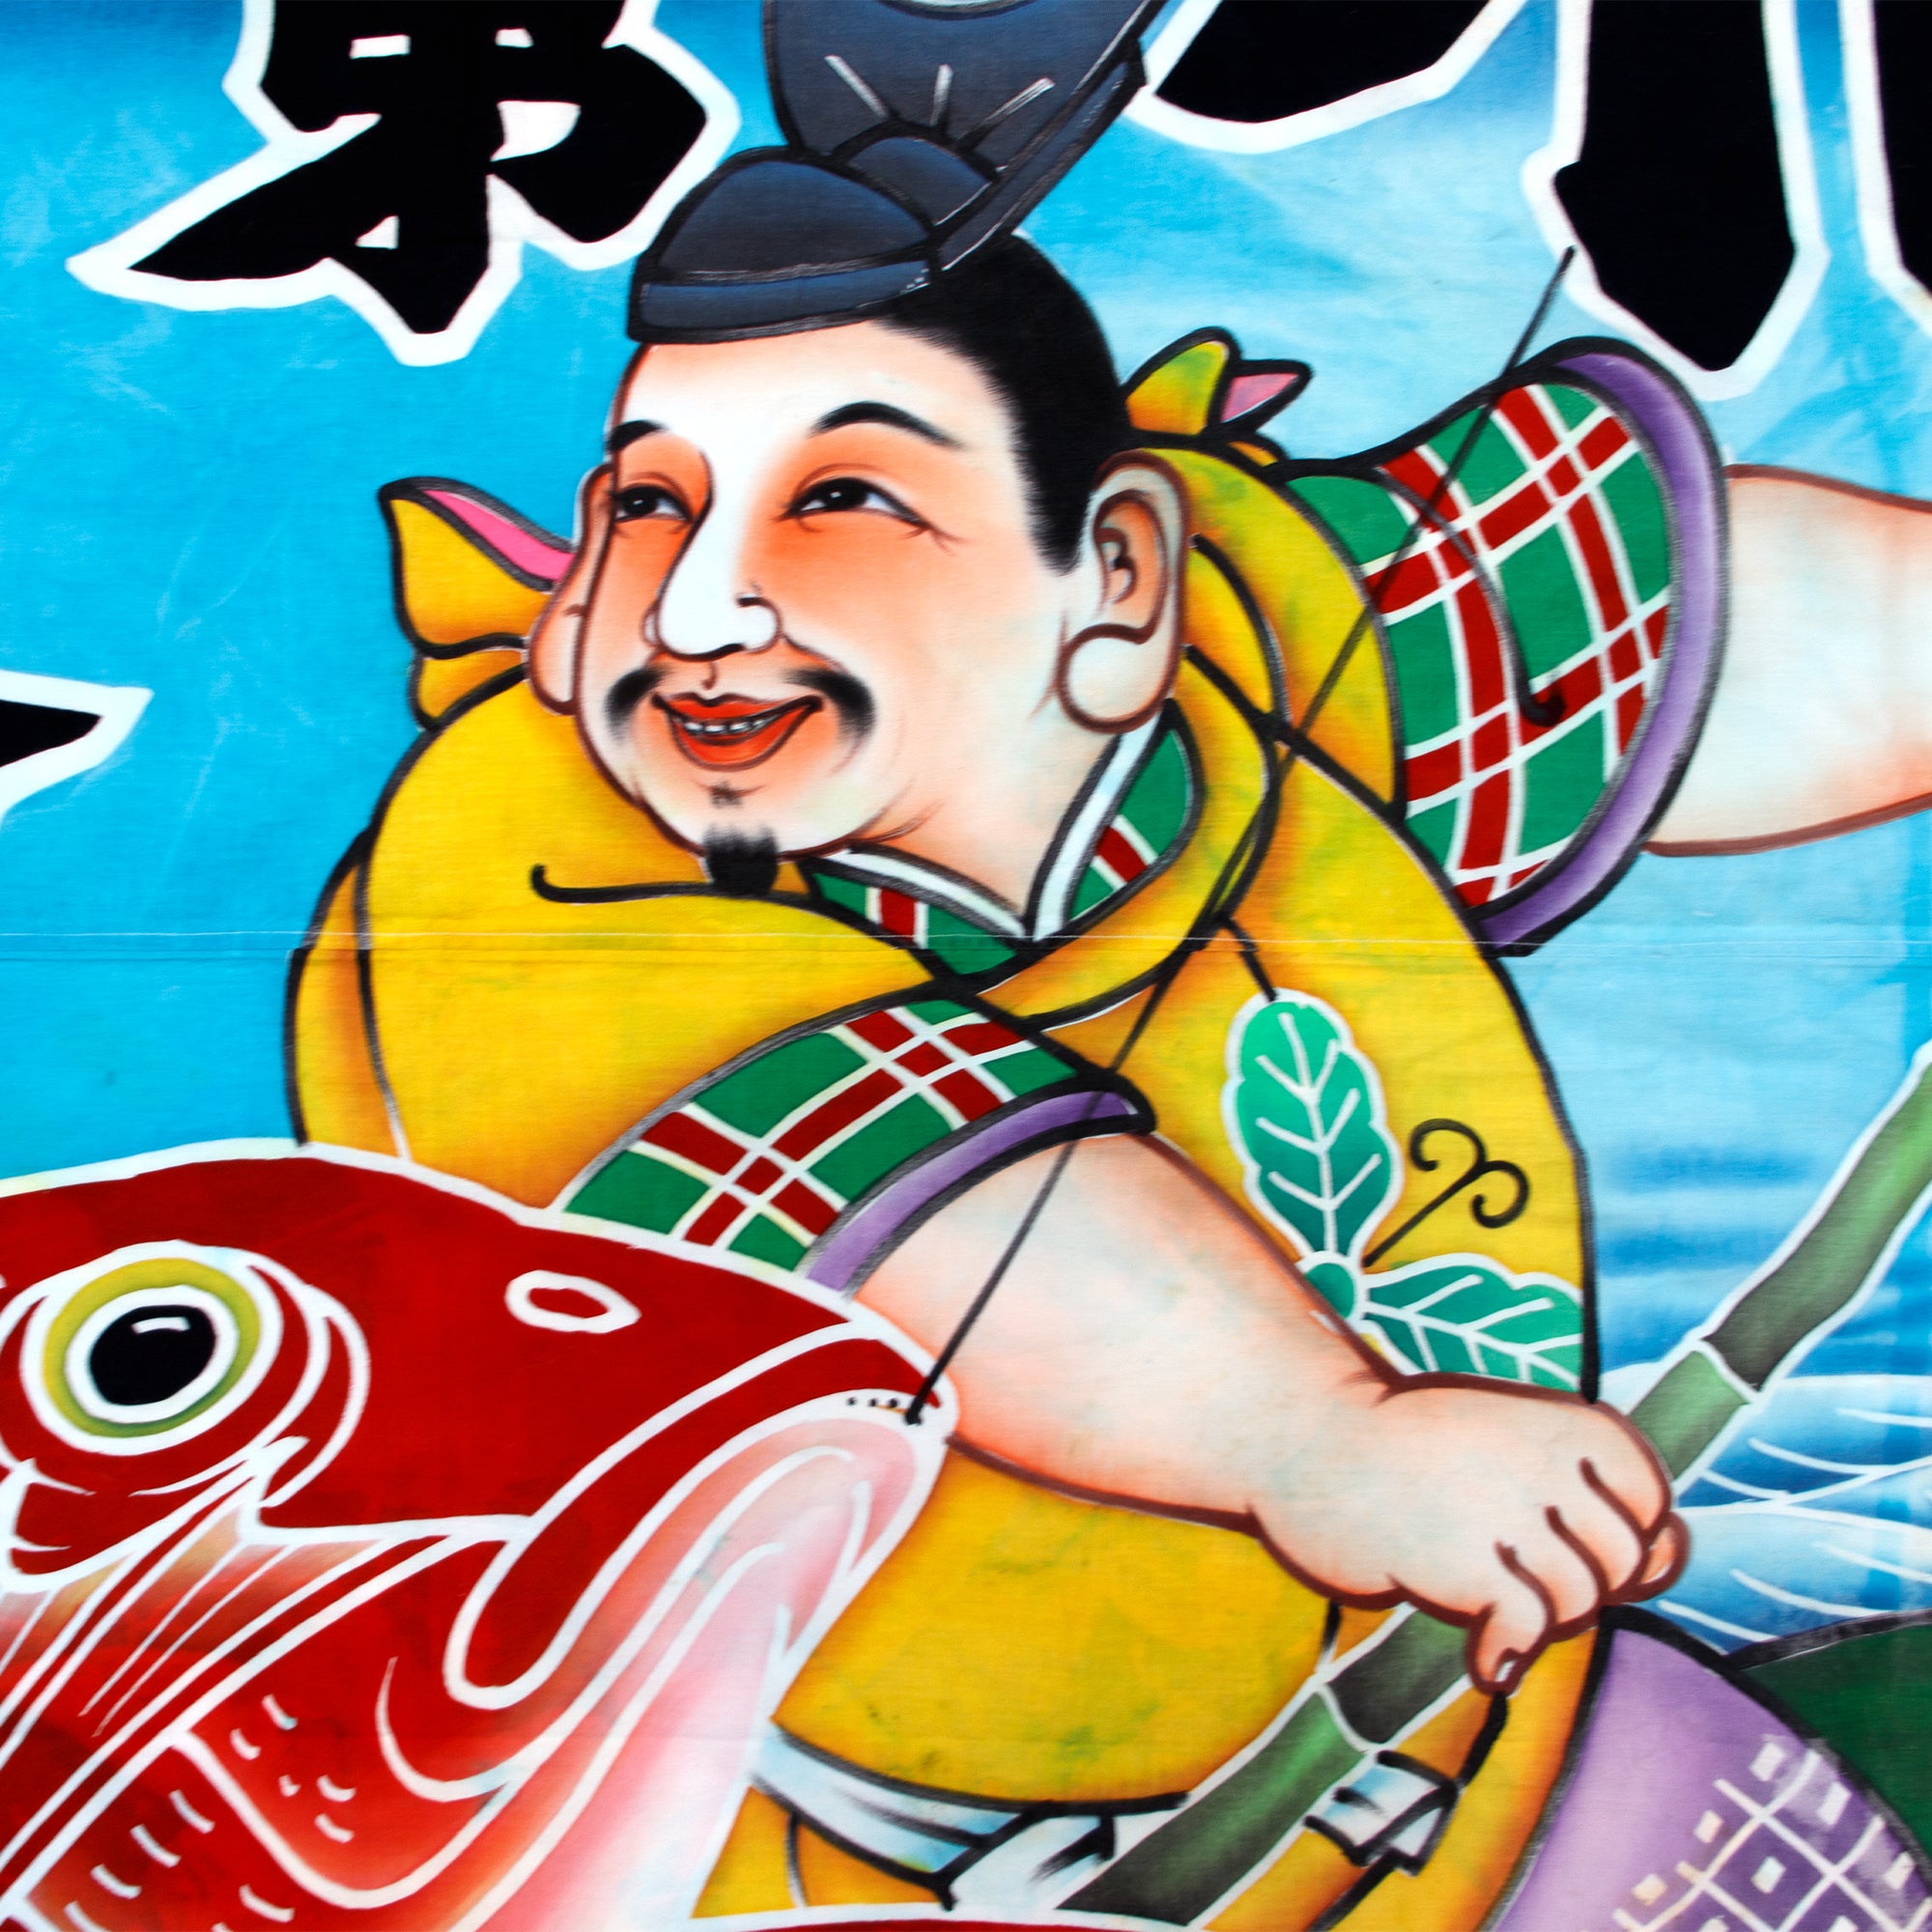 Ebisu Tairyou-Bata  Fishing Boat Flag – Shibui Japanese Antiques